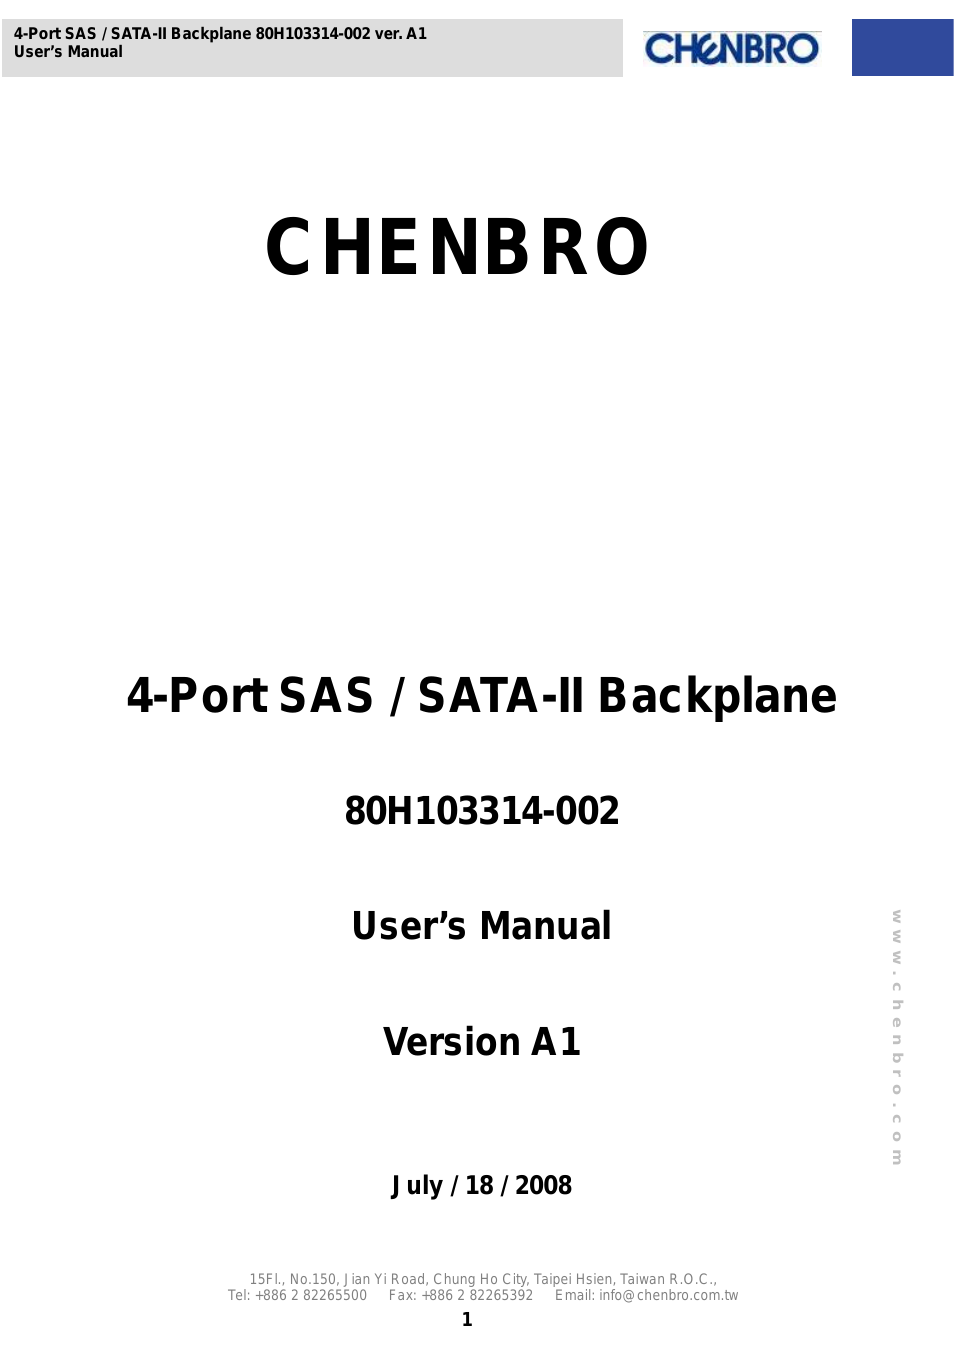 RM31408 3Gb/s 4-port 3.5 SATA/SAS Backplane(80H103314-002), Rev. A1 - Manual